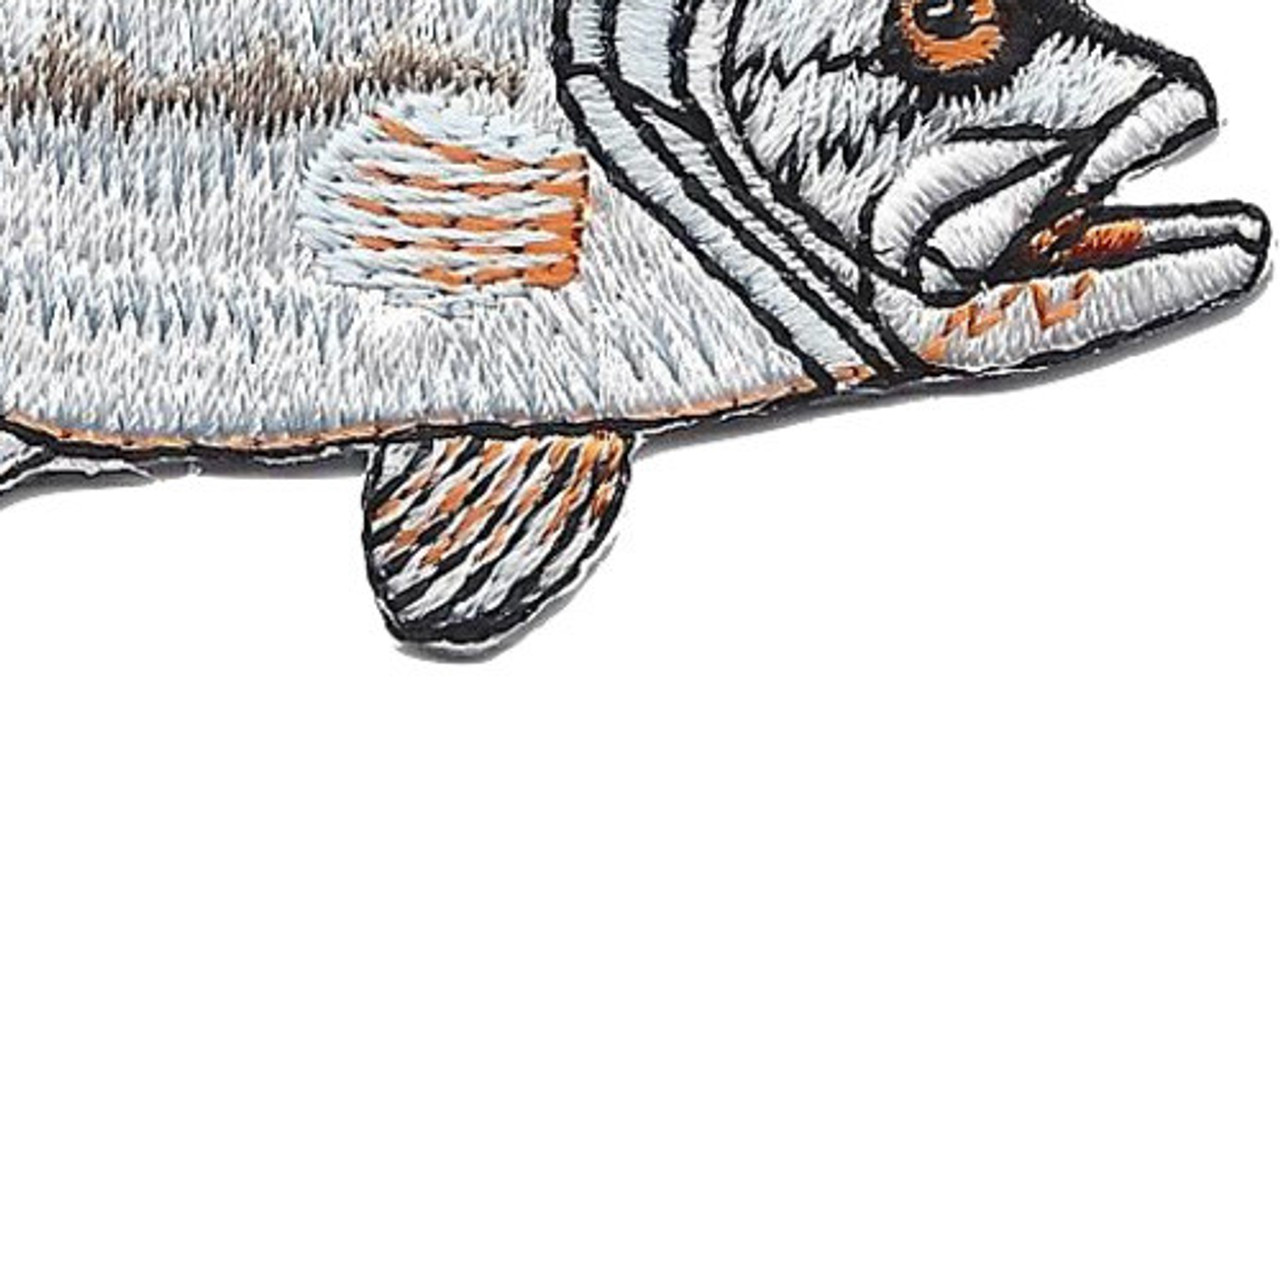 Largemouth Bass Patch, Fishing Patches